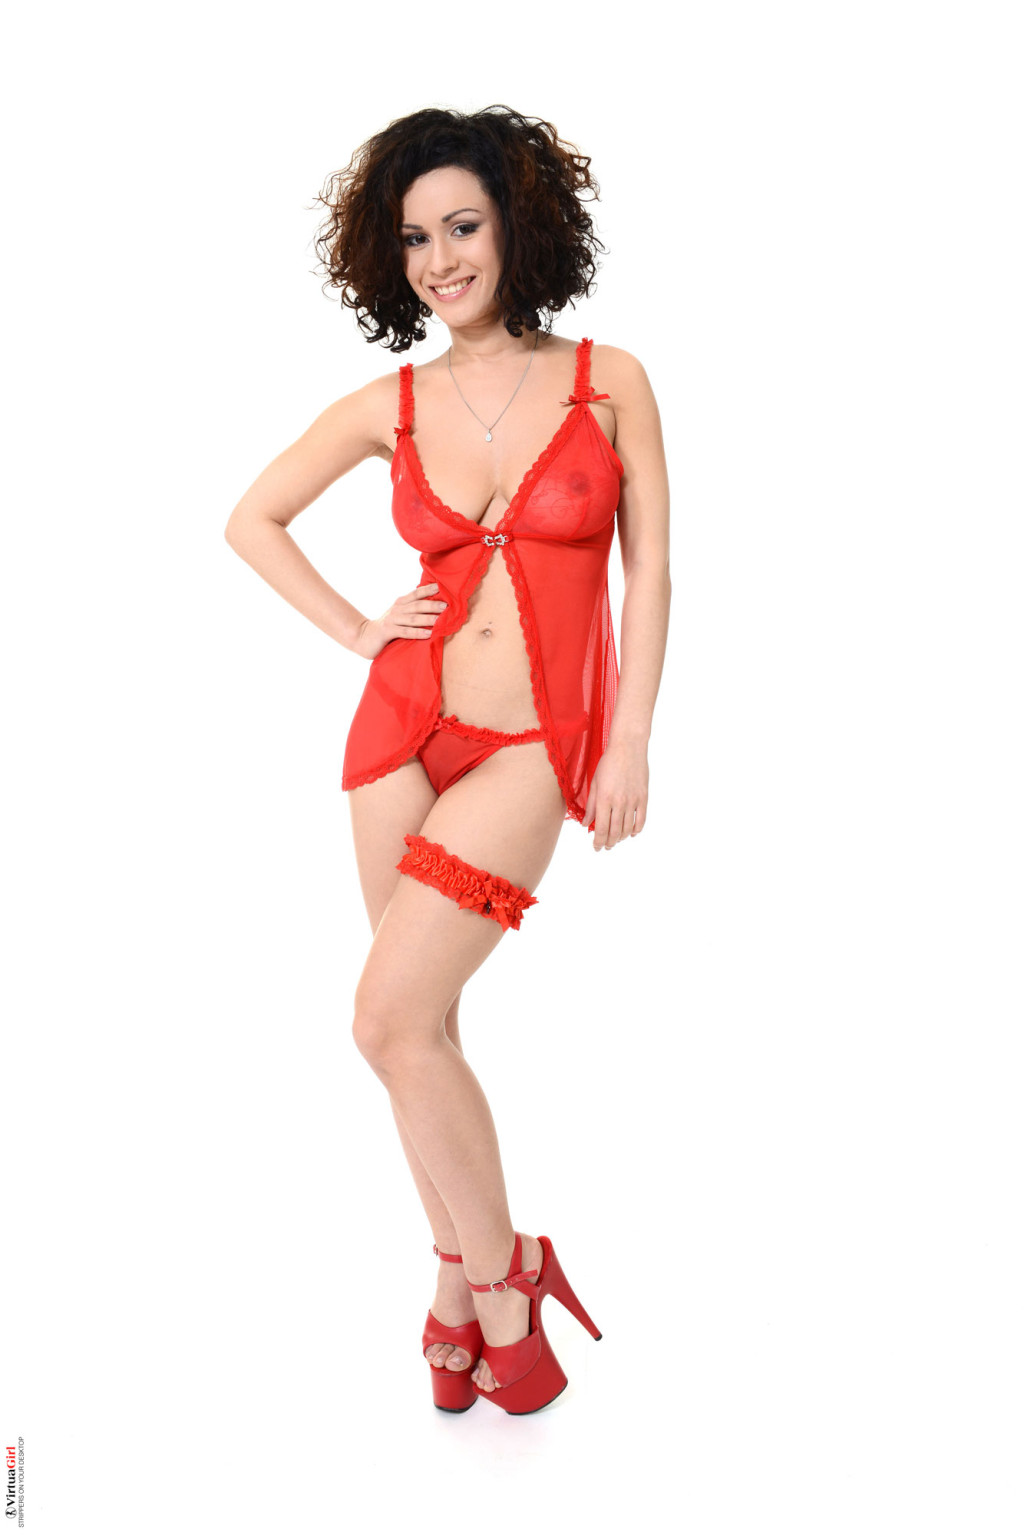 Beauty brunette teasing in her red sheer lingerie and heels #72350422